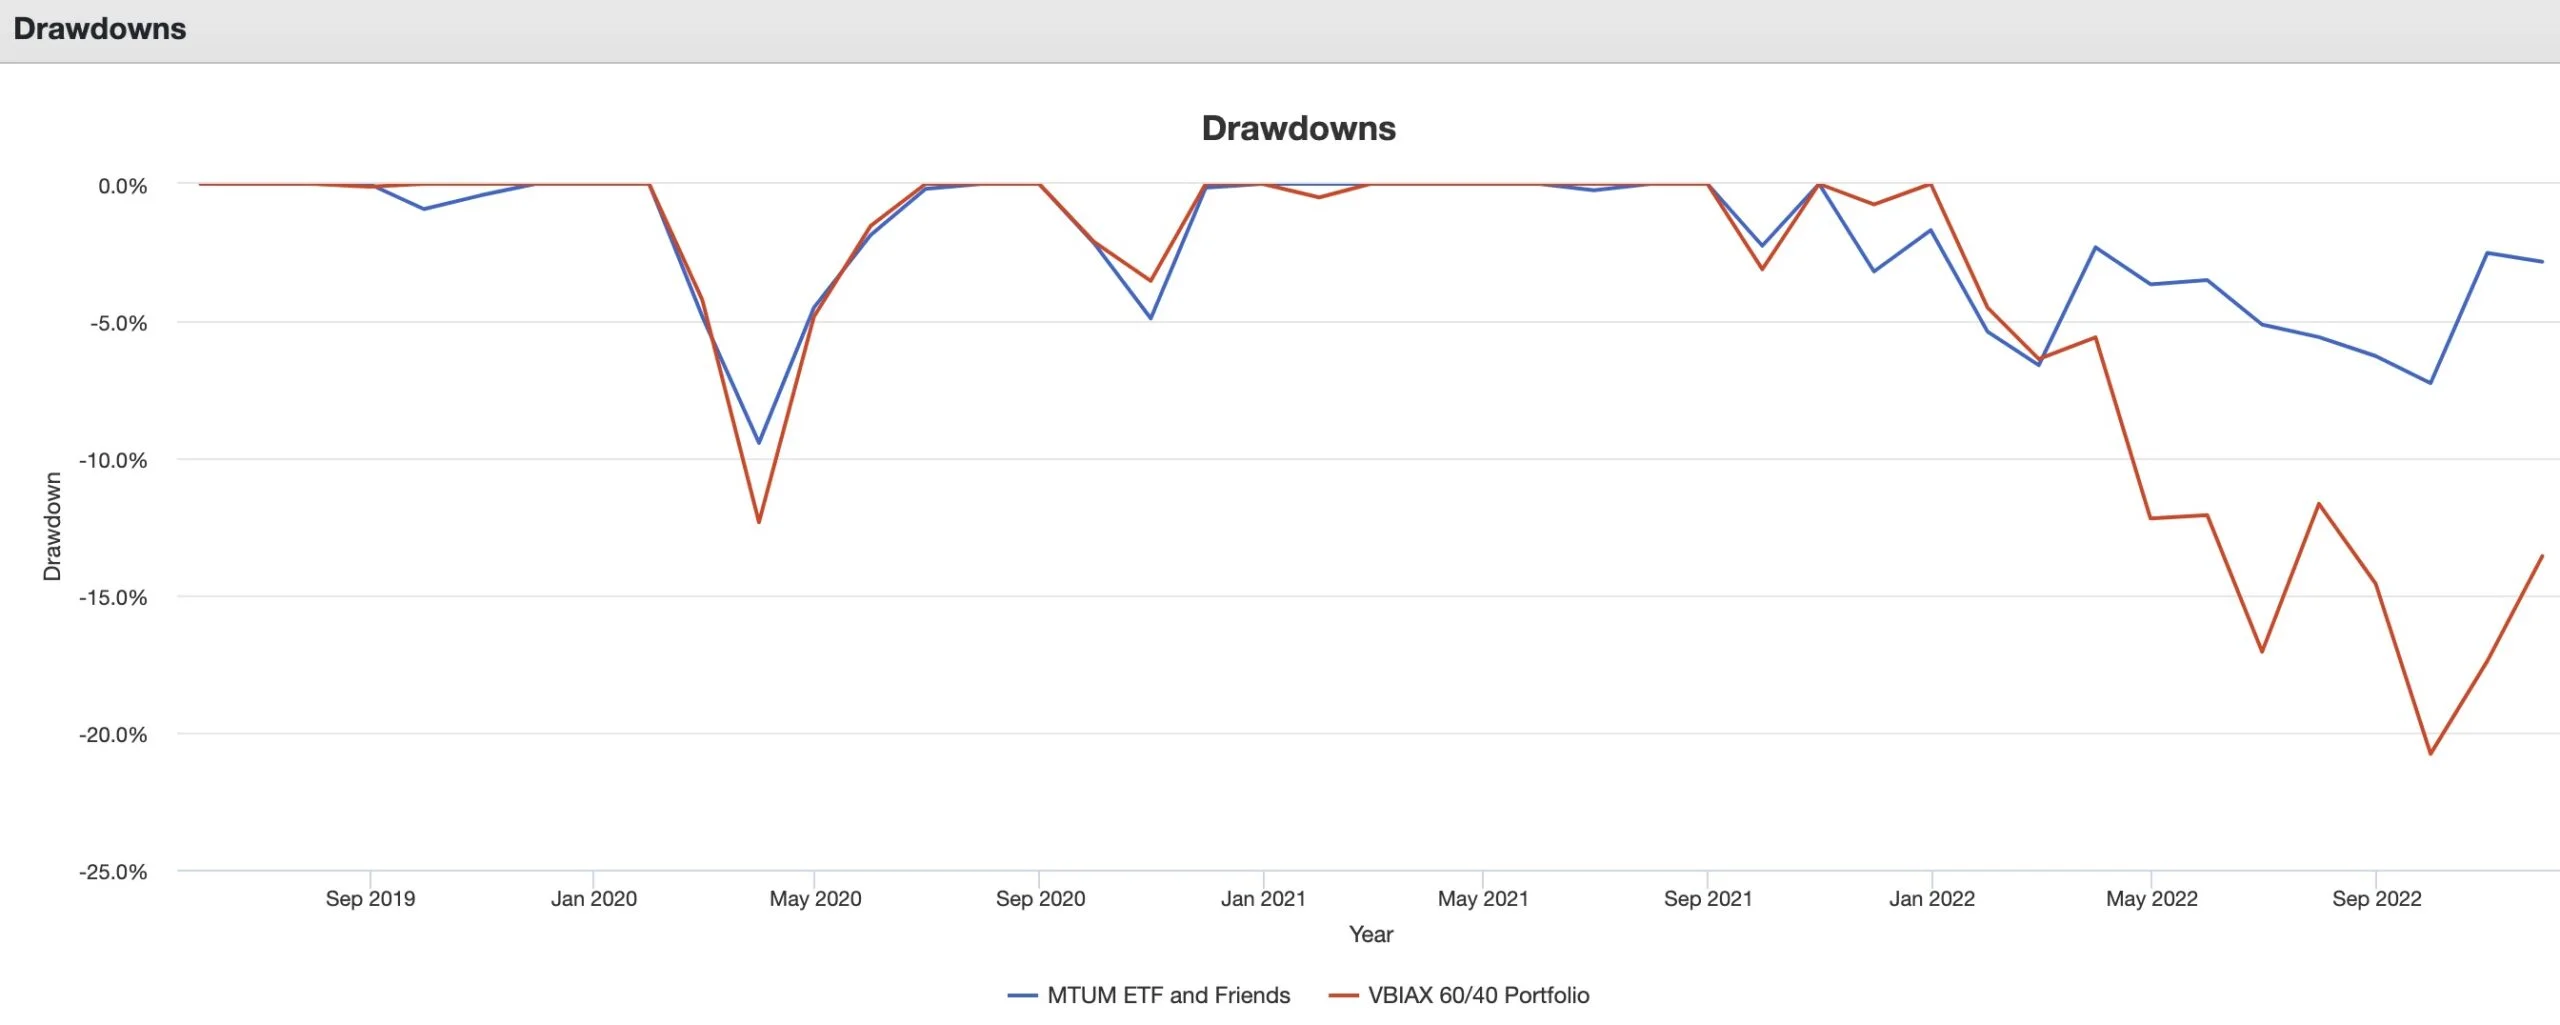 MTUM ETF and Friends drawdowns versus a 60/40 Portfolio VBIAX